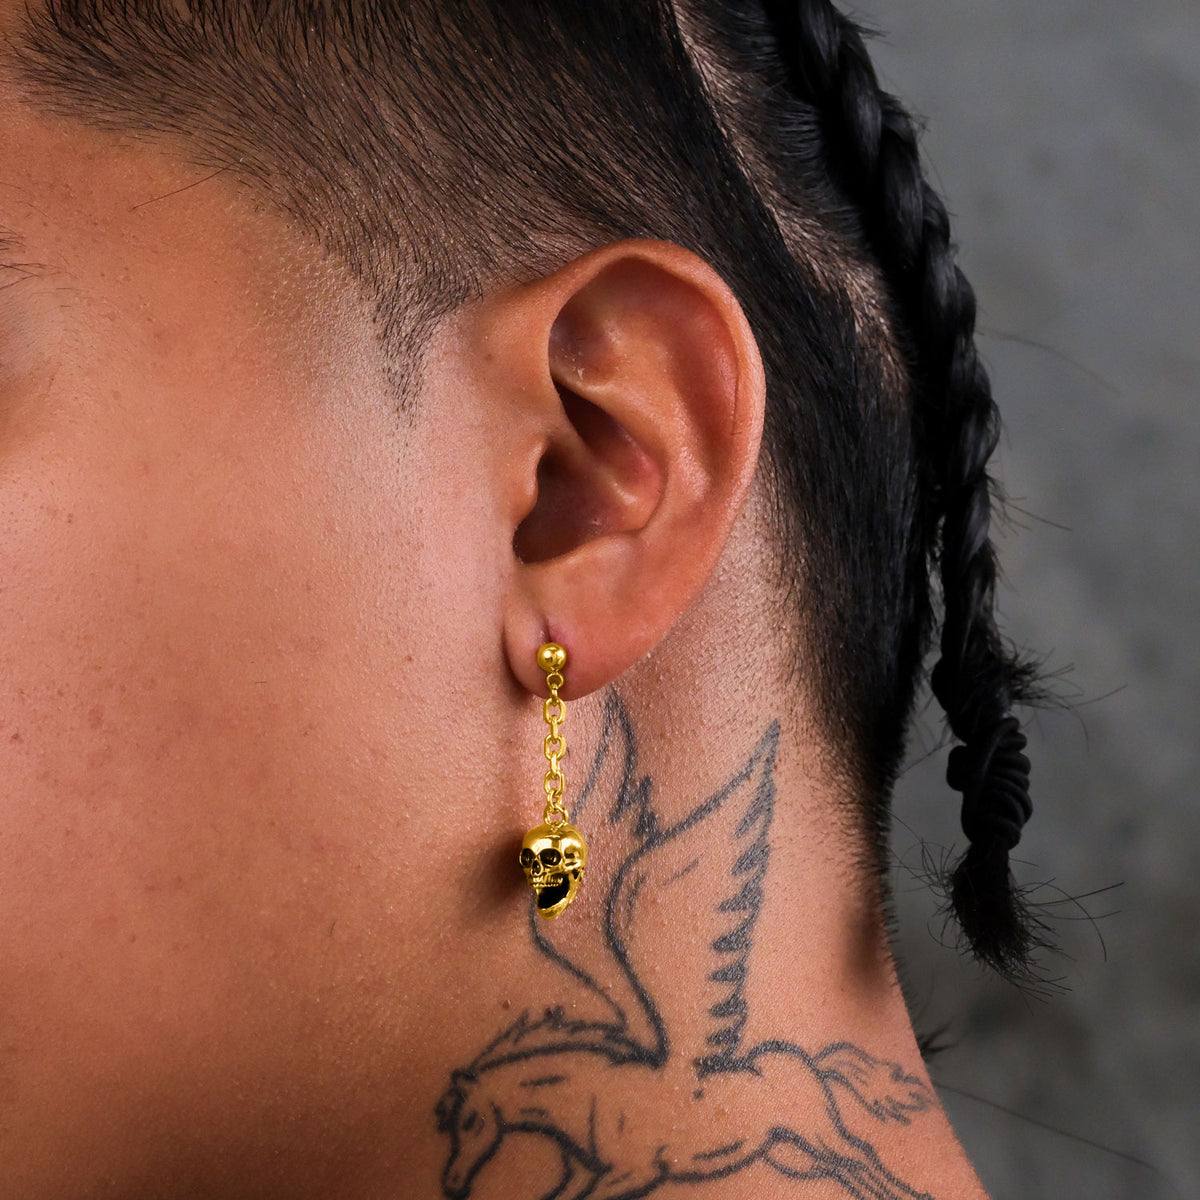 Skull charm earrings on chain in gold